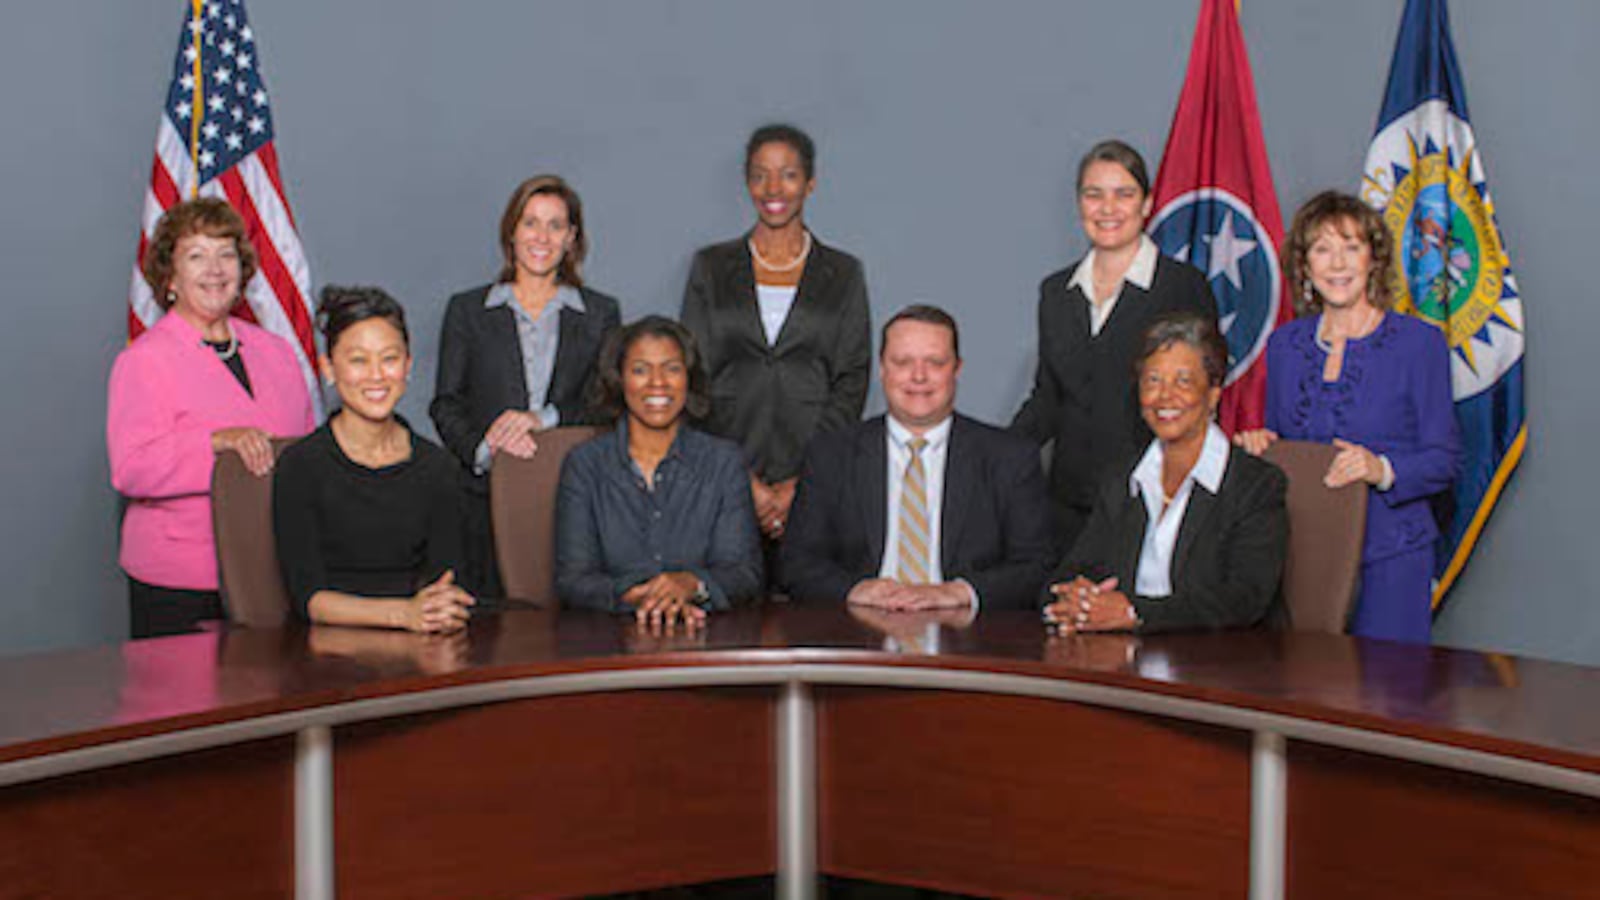 Board members for Metro Nashville Public Schools